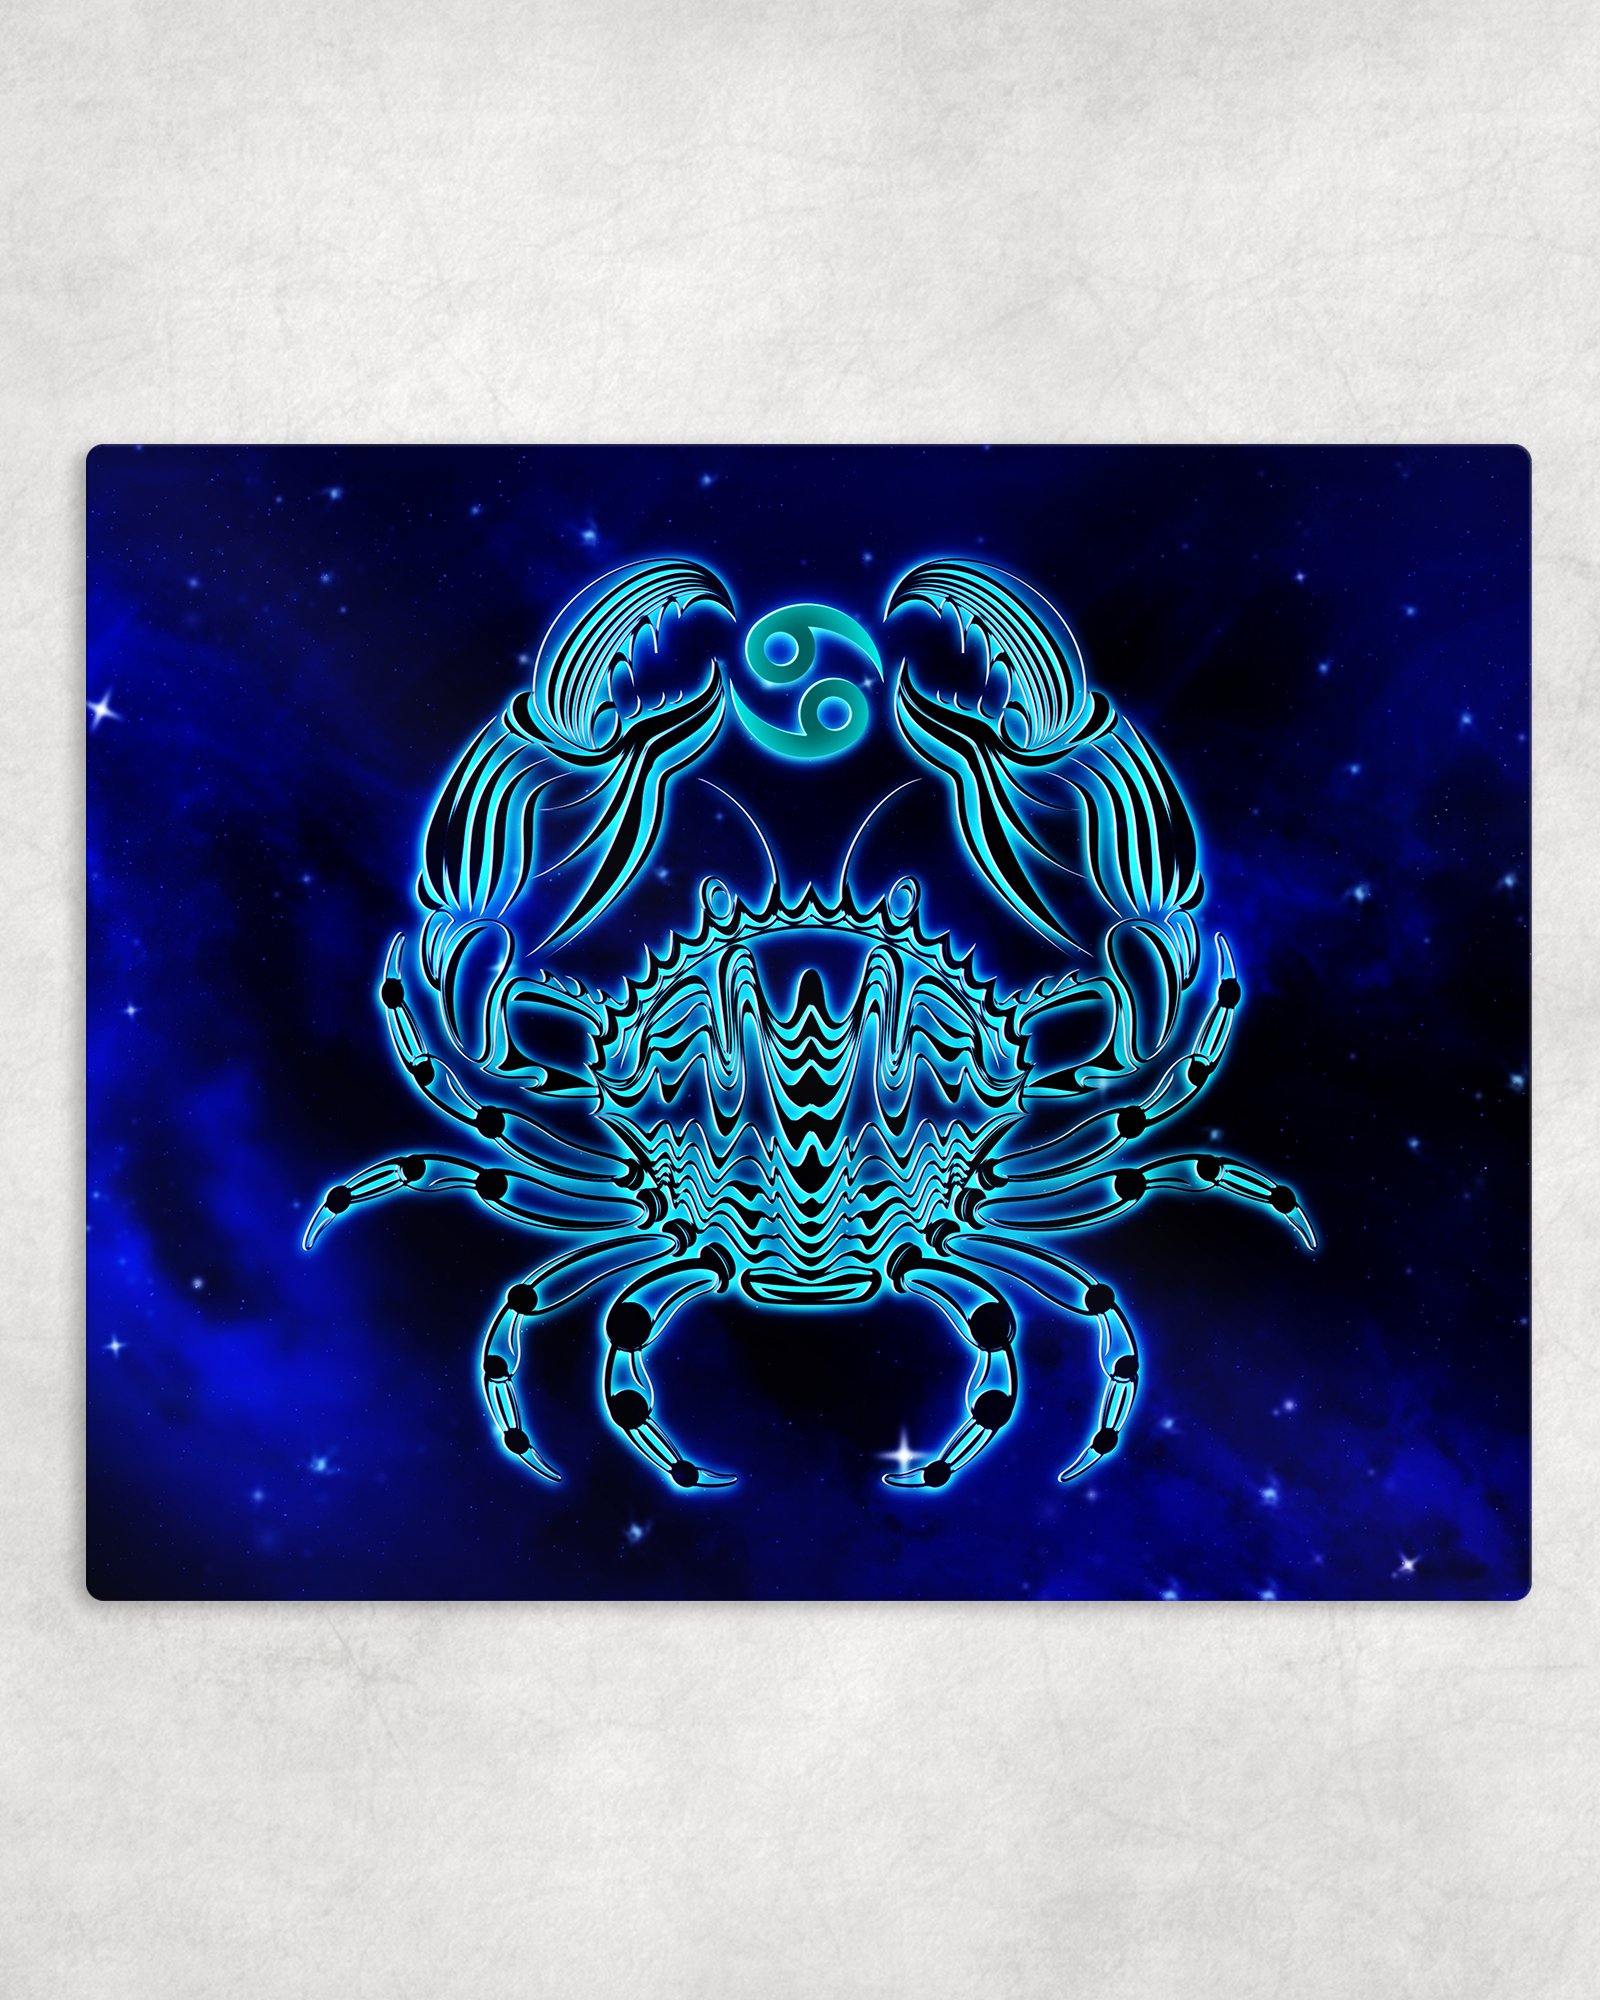 Zodiac Cancer Metal Photo Panel - 8x10 - Schoppix Gifts